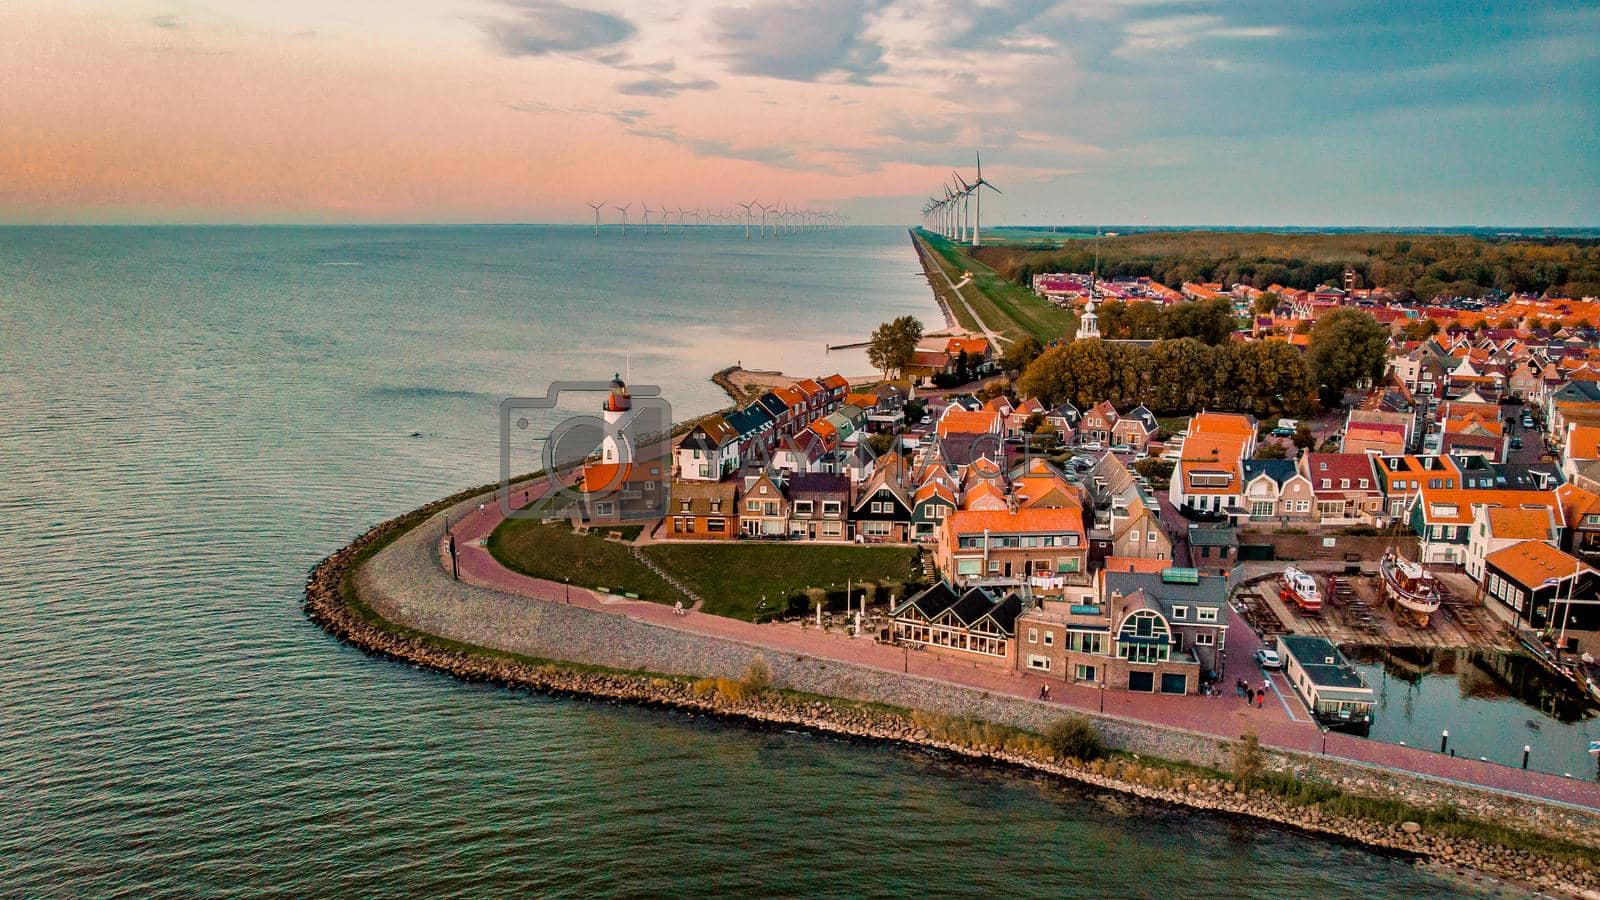 Royalty free image of Urk Flevoland Netherlands sunset at the lighthouse and harbor of Urk Holland. Fishing village Urk by fokkebok